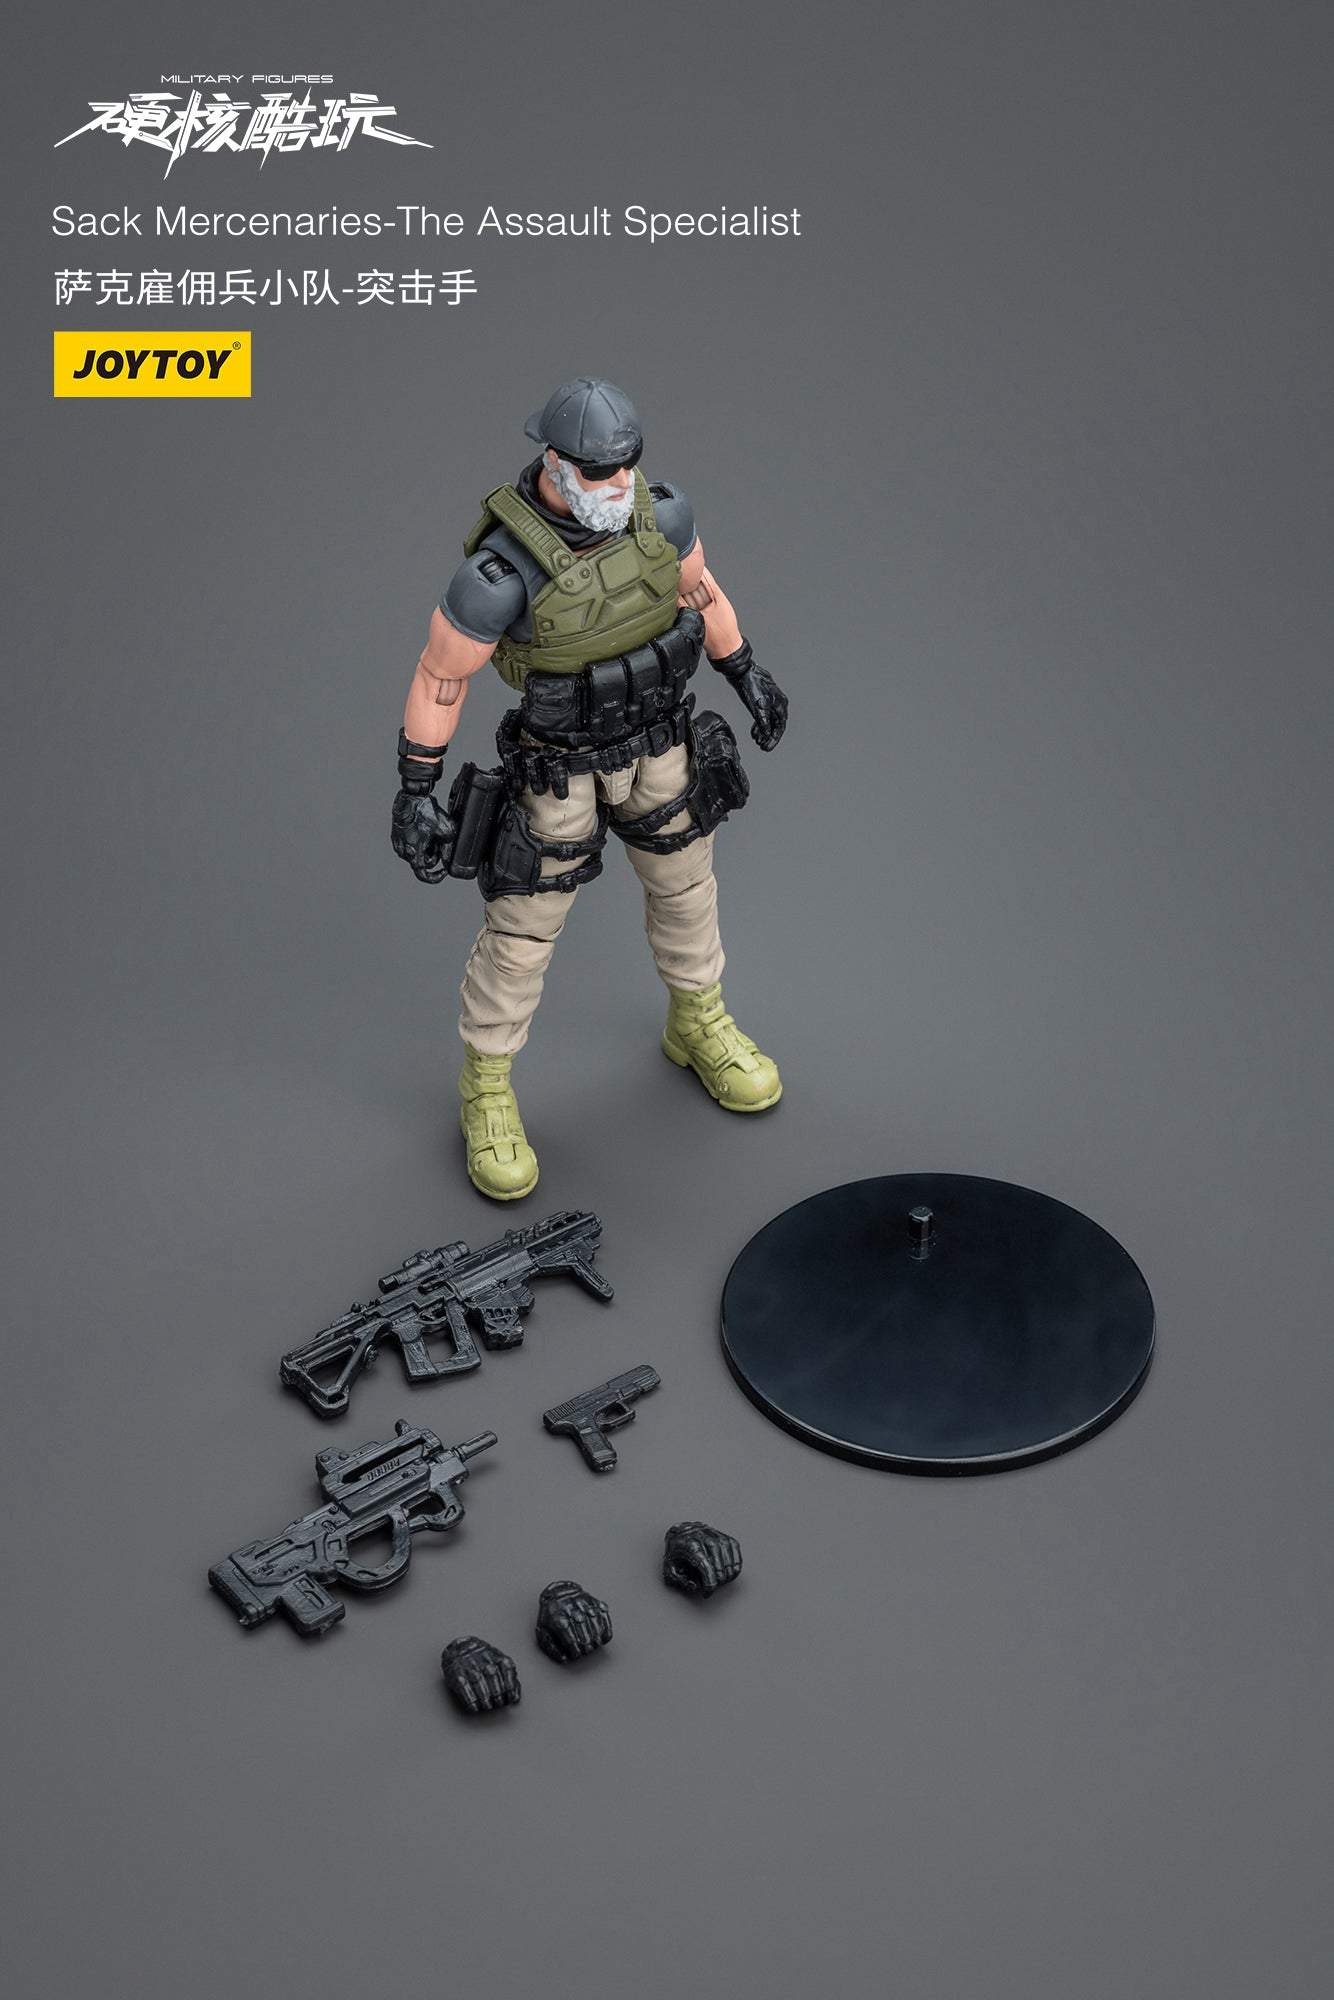 Sack Mercenaries-The Assault Specialist - Military Action Figure By JOYTOY